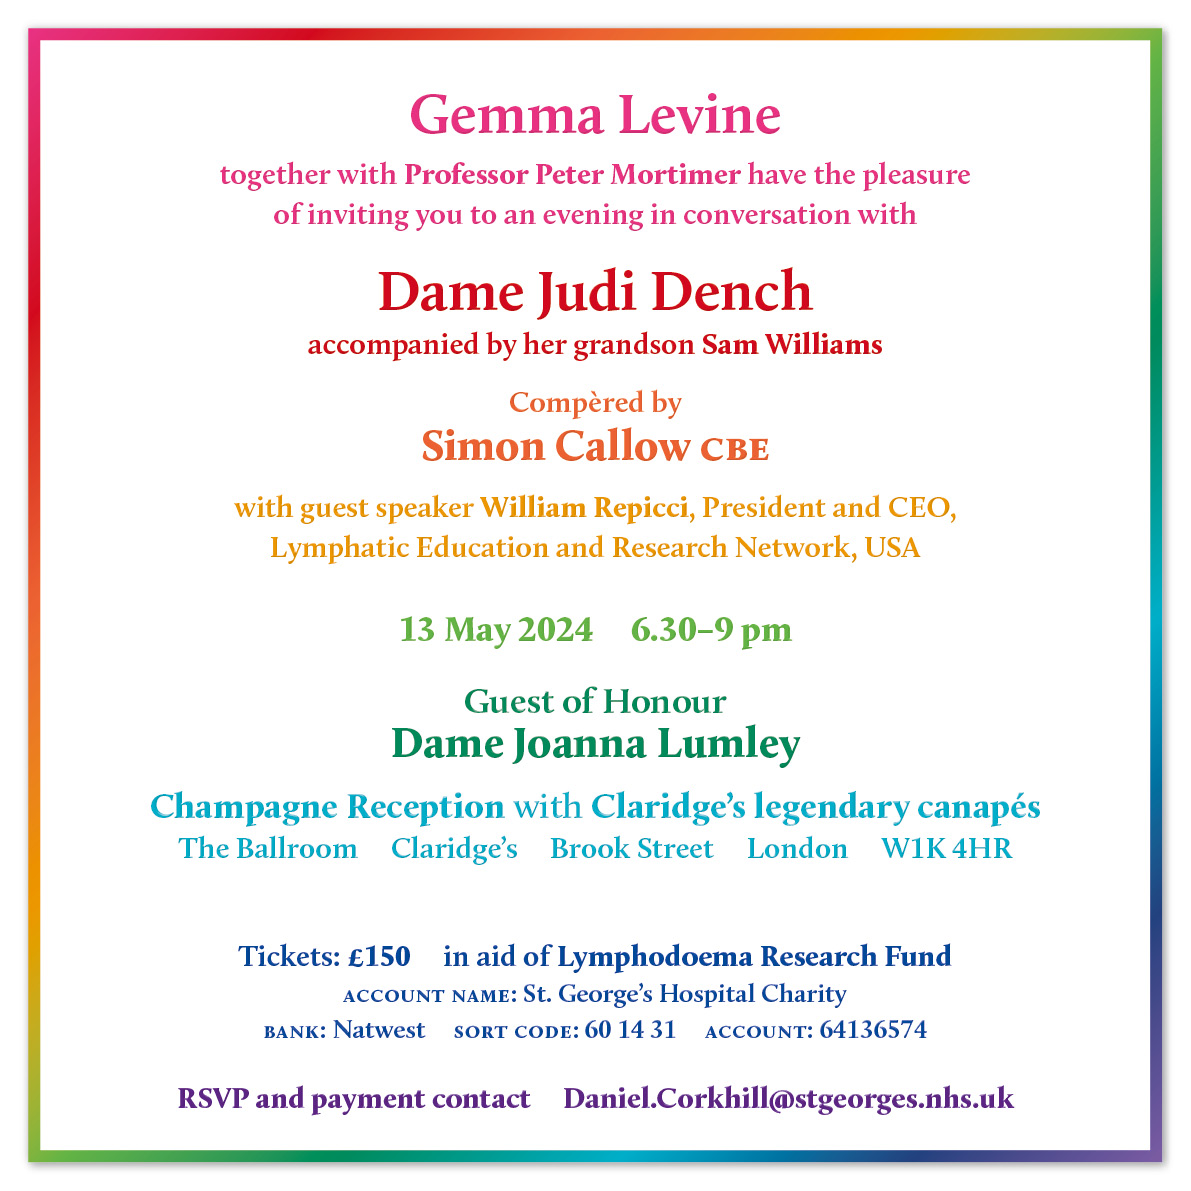 invite to gemma levine event with Dame Judi Dench